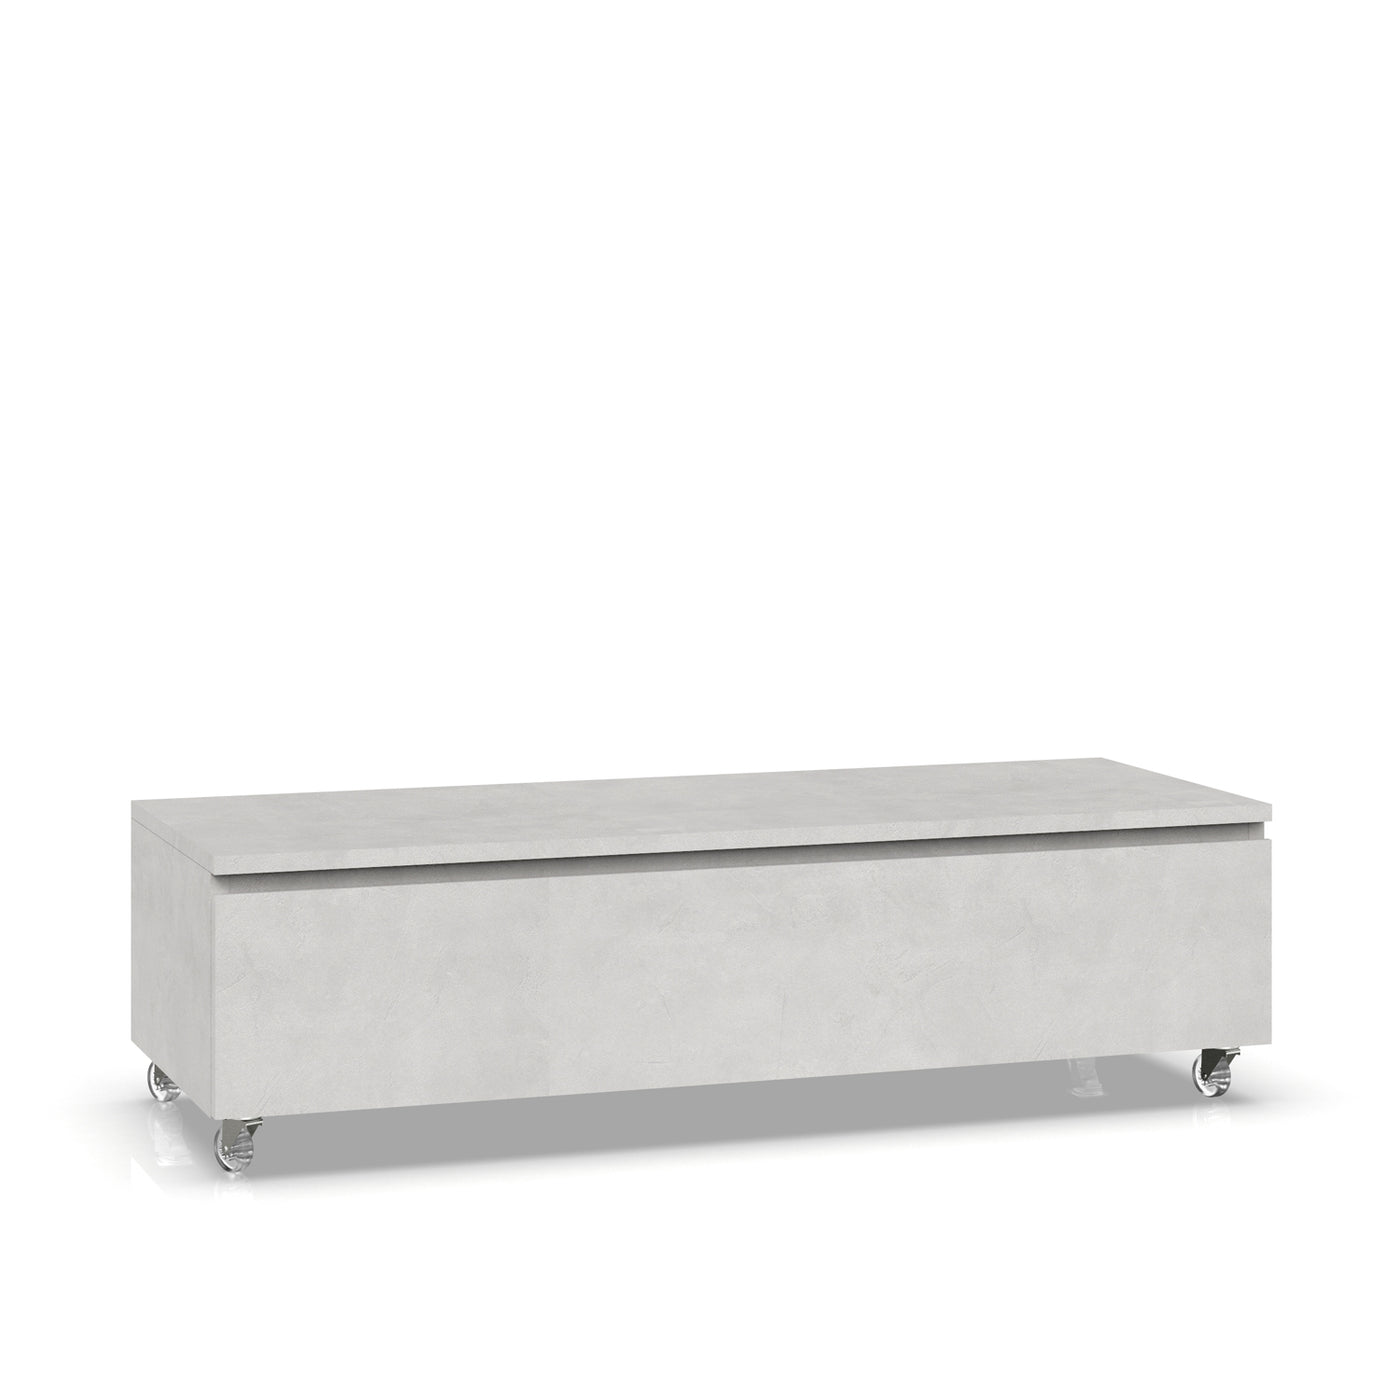 YOKA stone white chest of drawers 120 cm